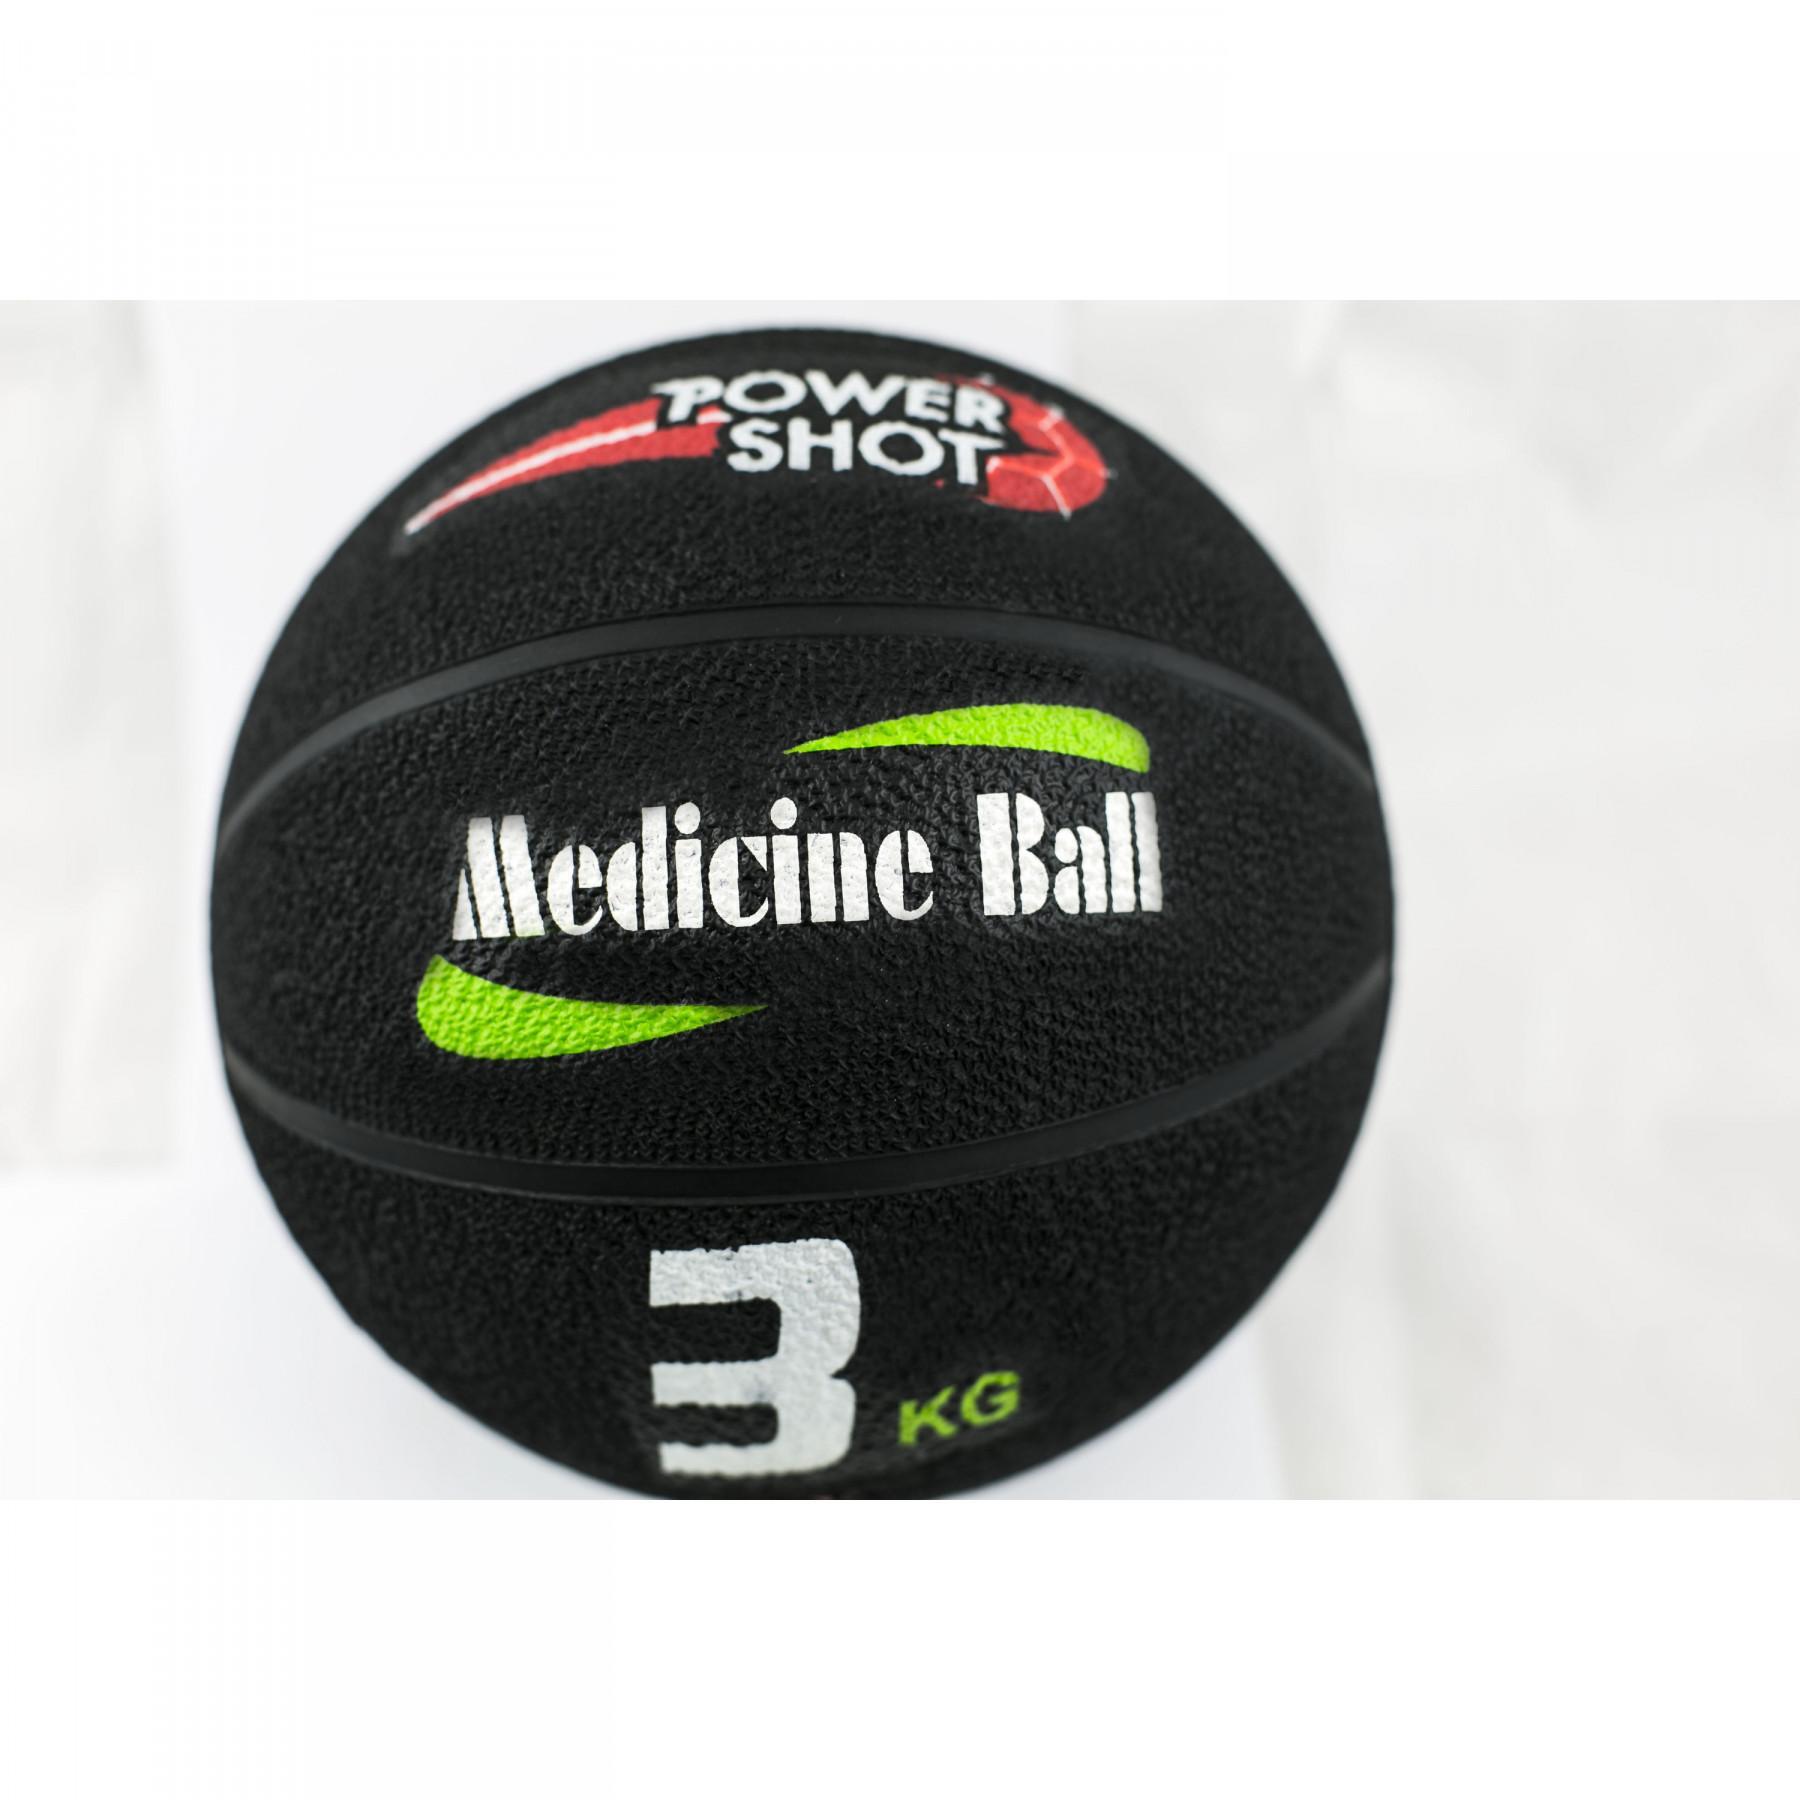 Medecine ball - 2kg PowerShot